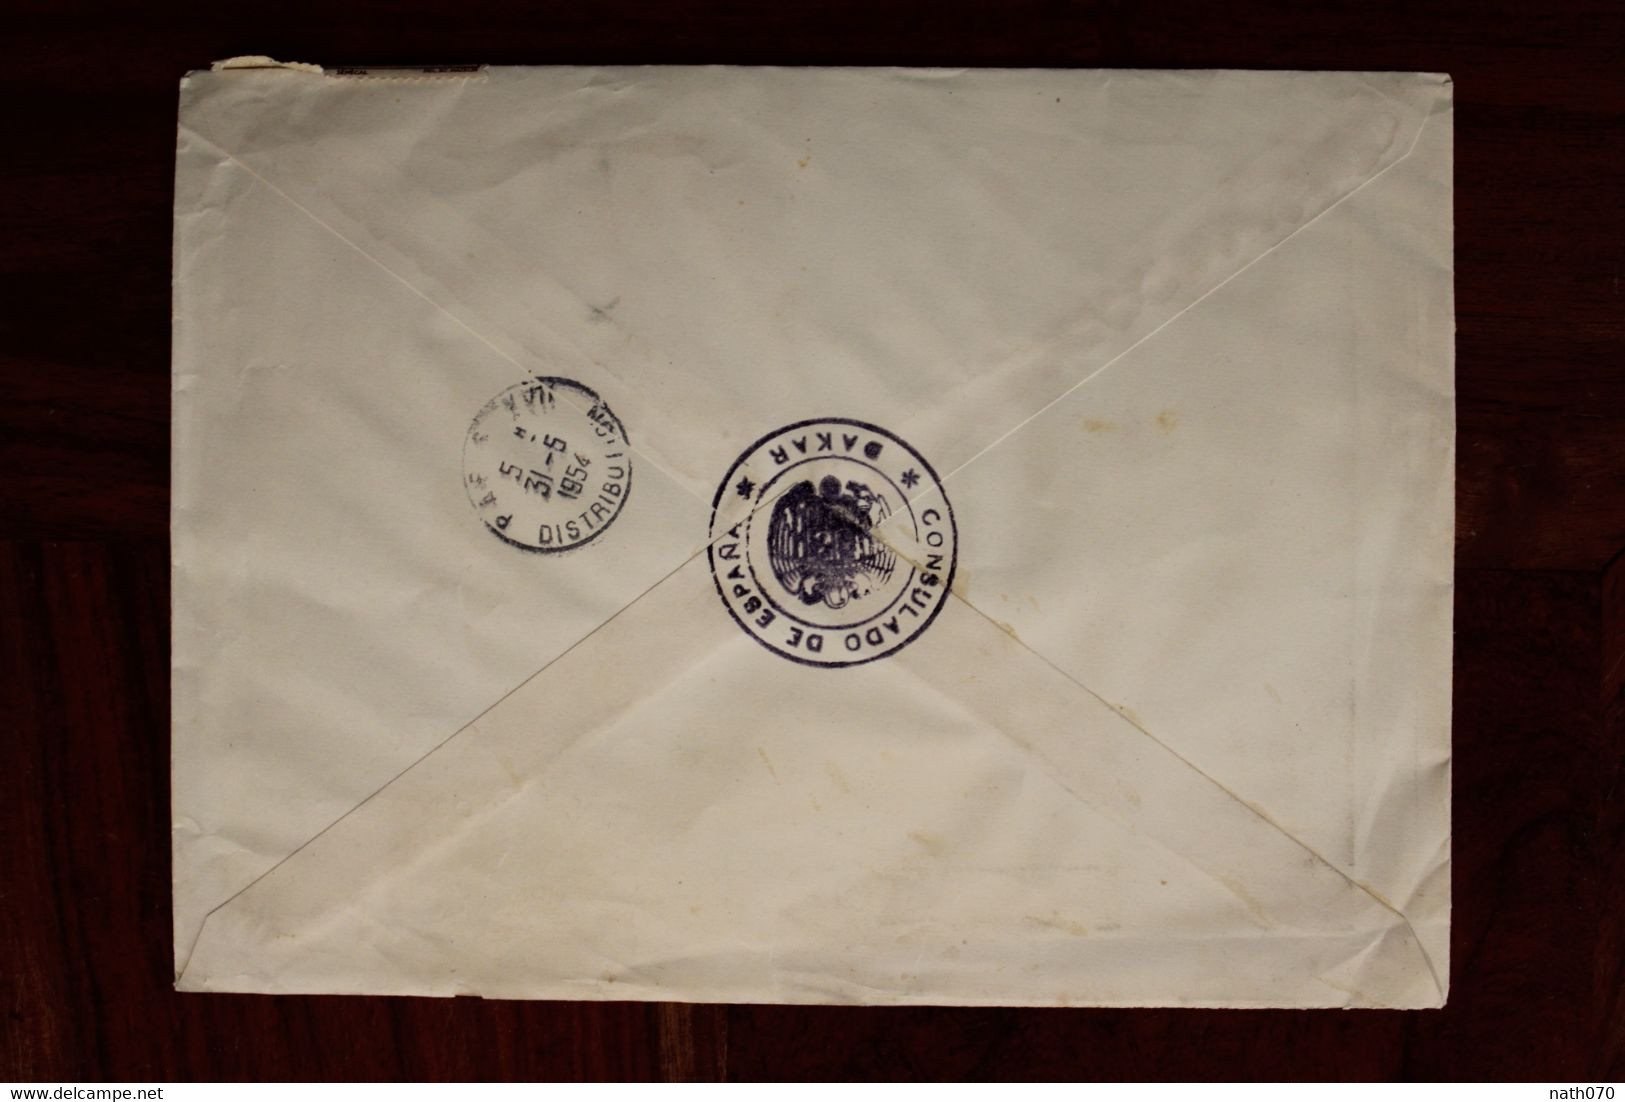 1954 SENEGAL France Enveloppe Consulado Espana Spain Espagne Cover Air Mail Colonies AOF Recommandé Registered R - Lettres & Documents